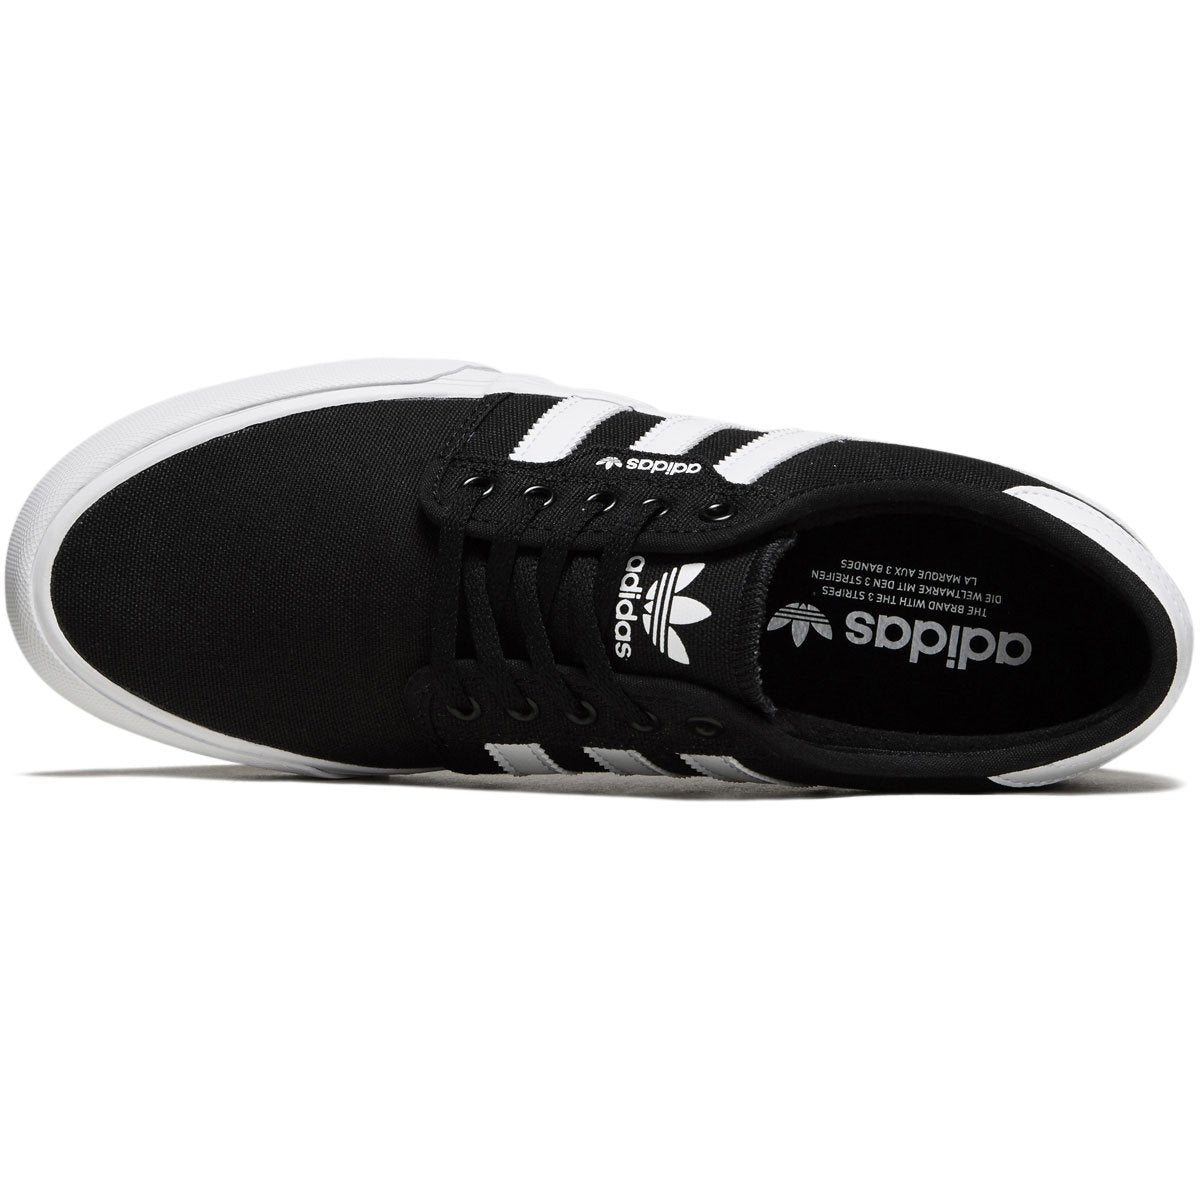 Core Seeley Daddies Adidas – Black/White/White Shop Shoes Xt - Board